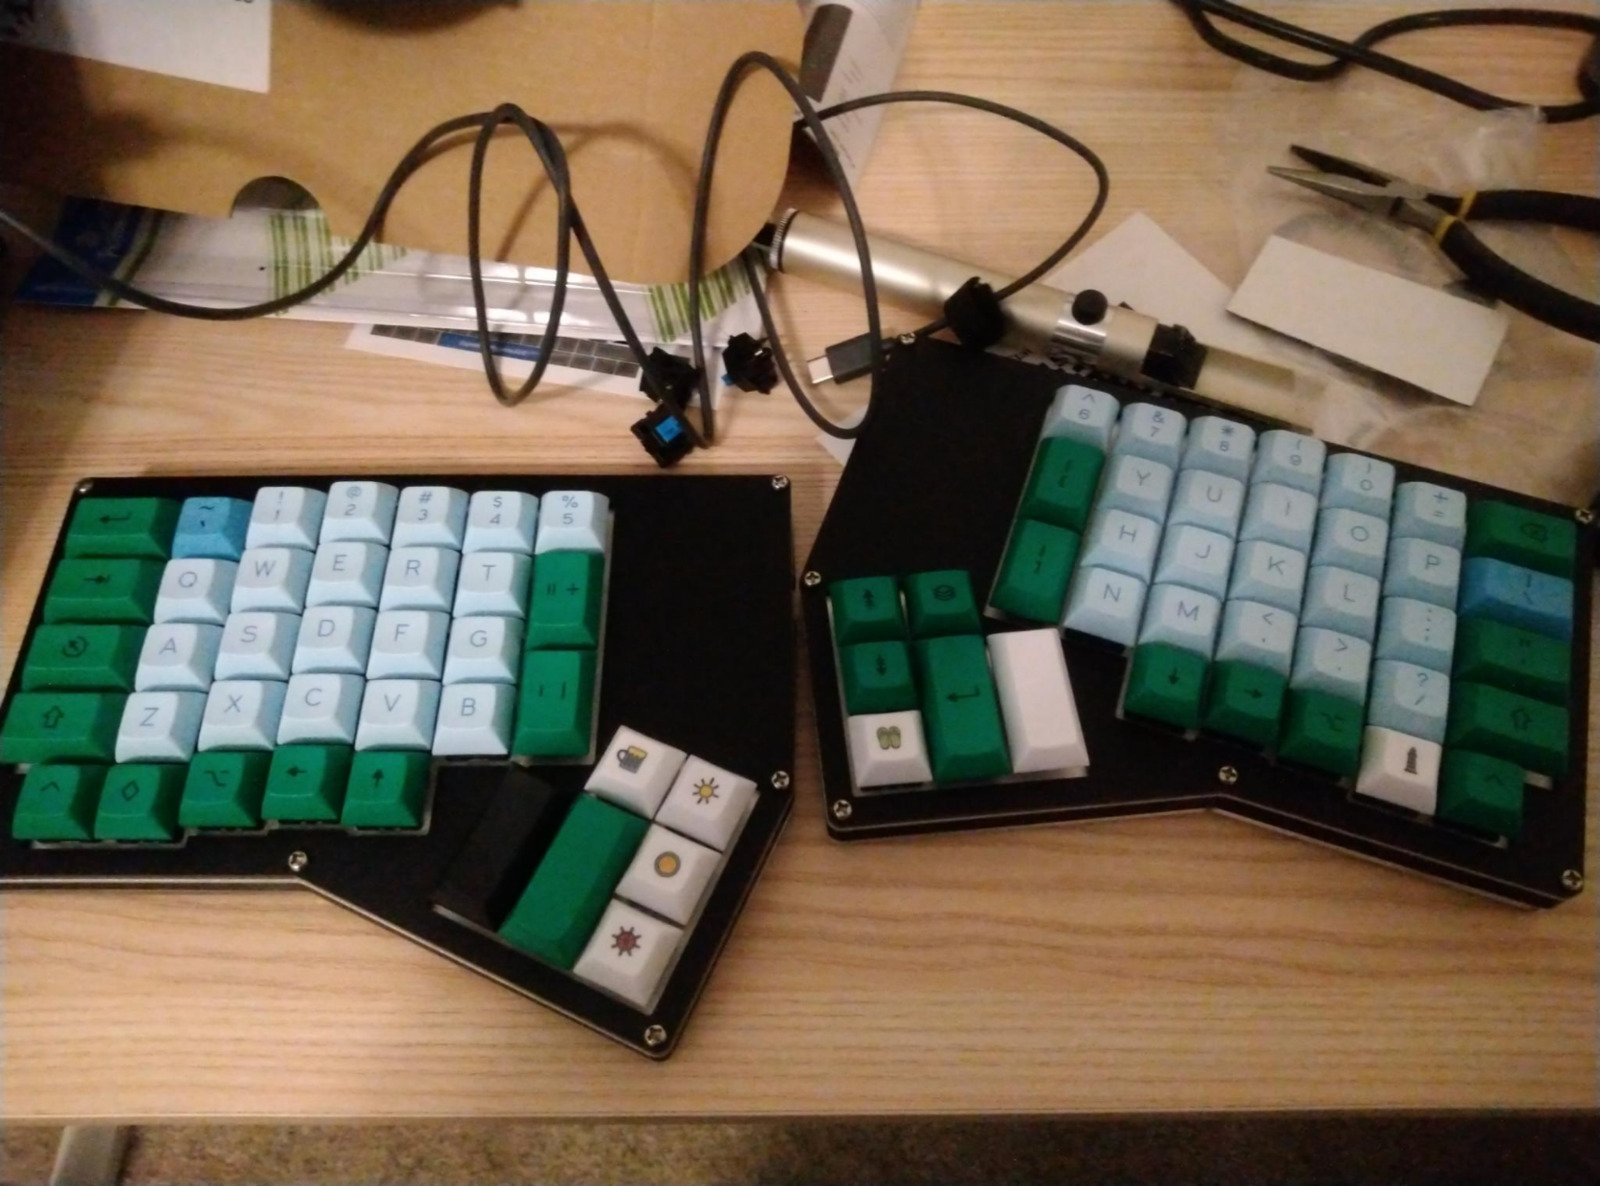 SliceMK Keyboard